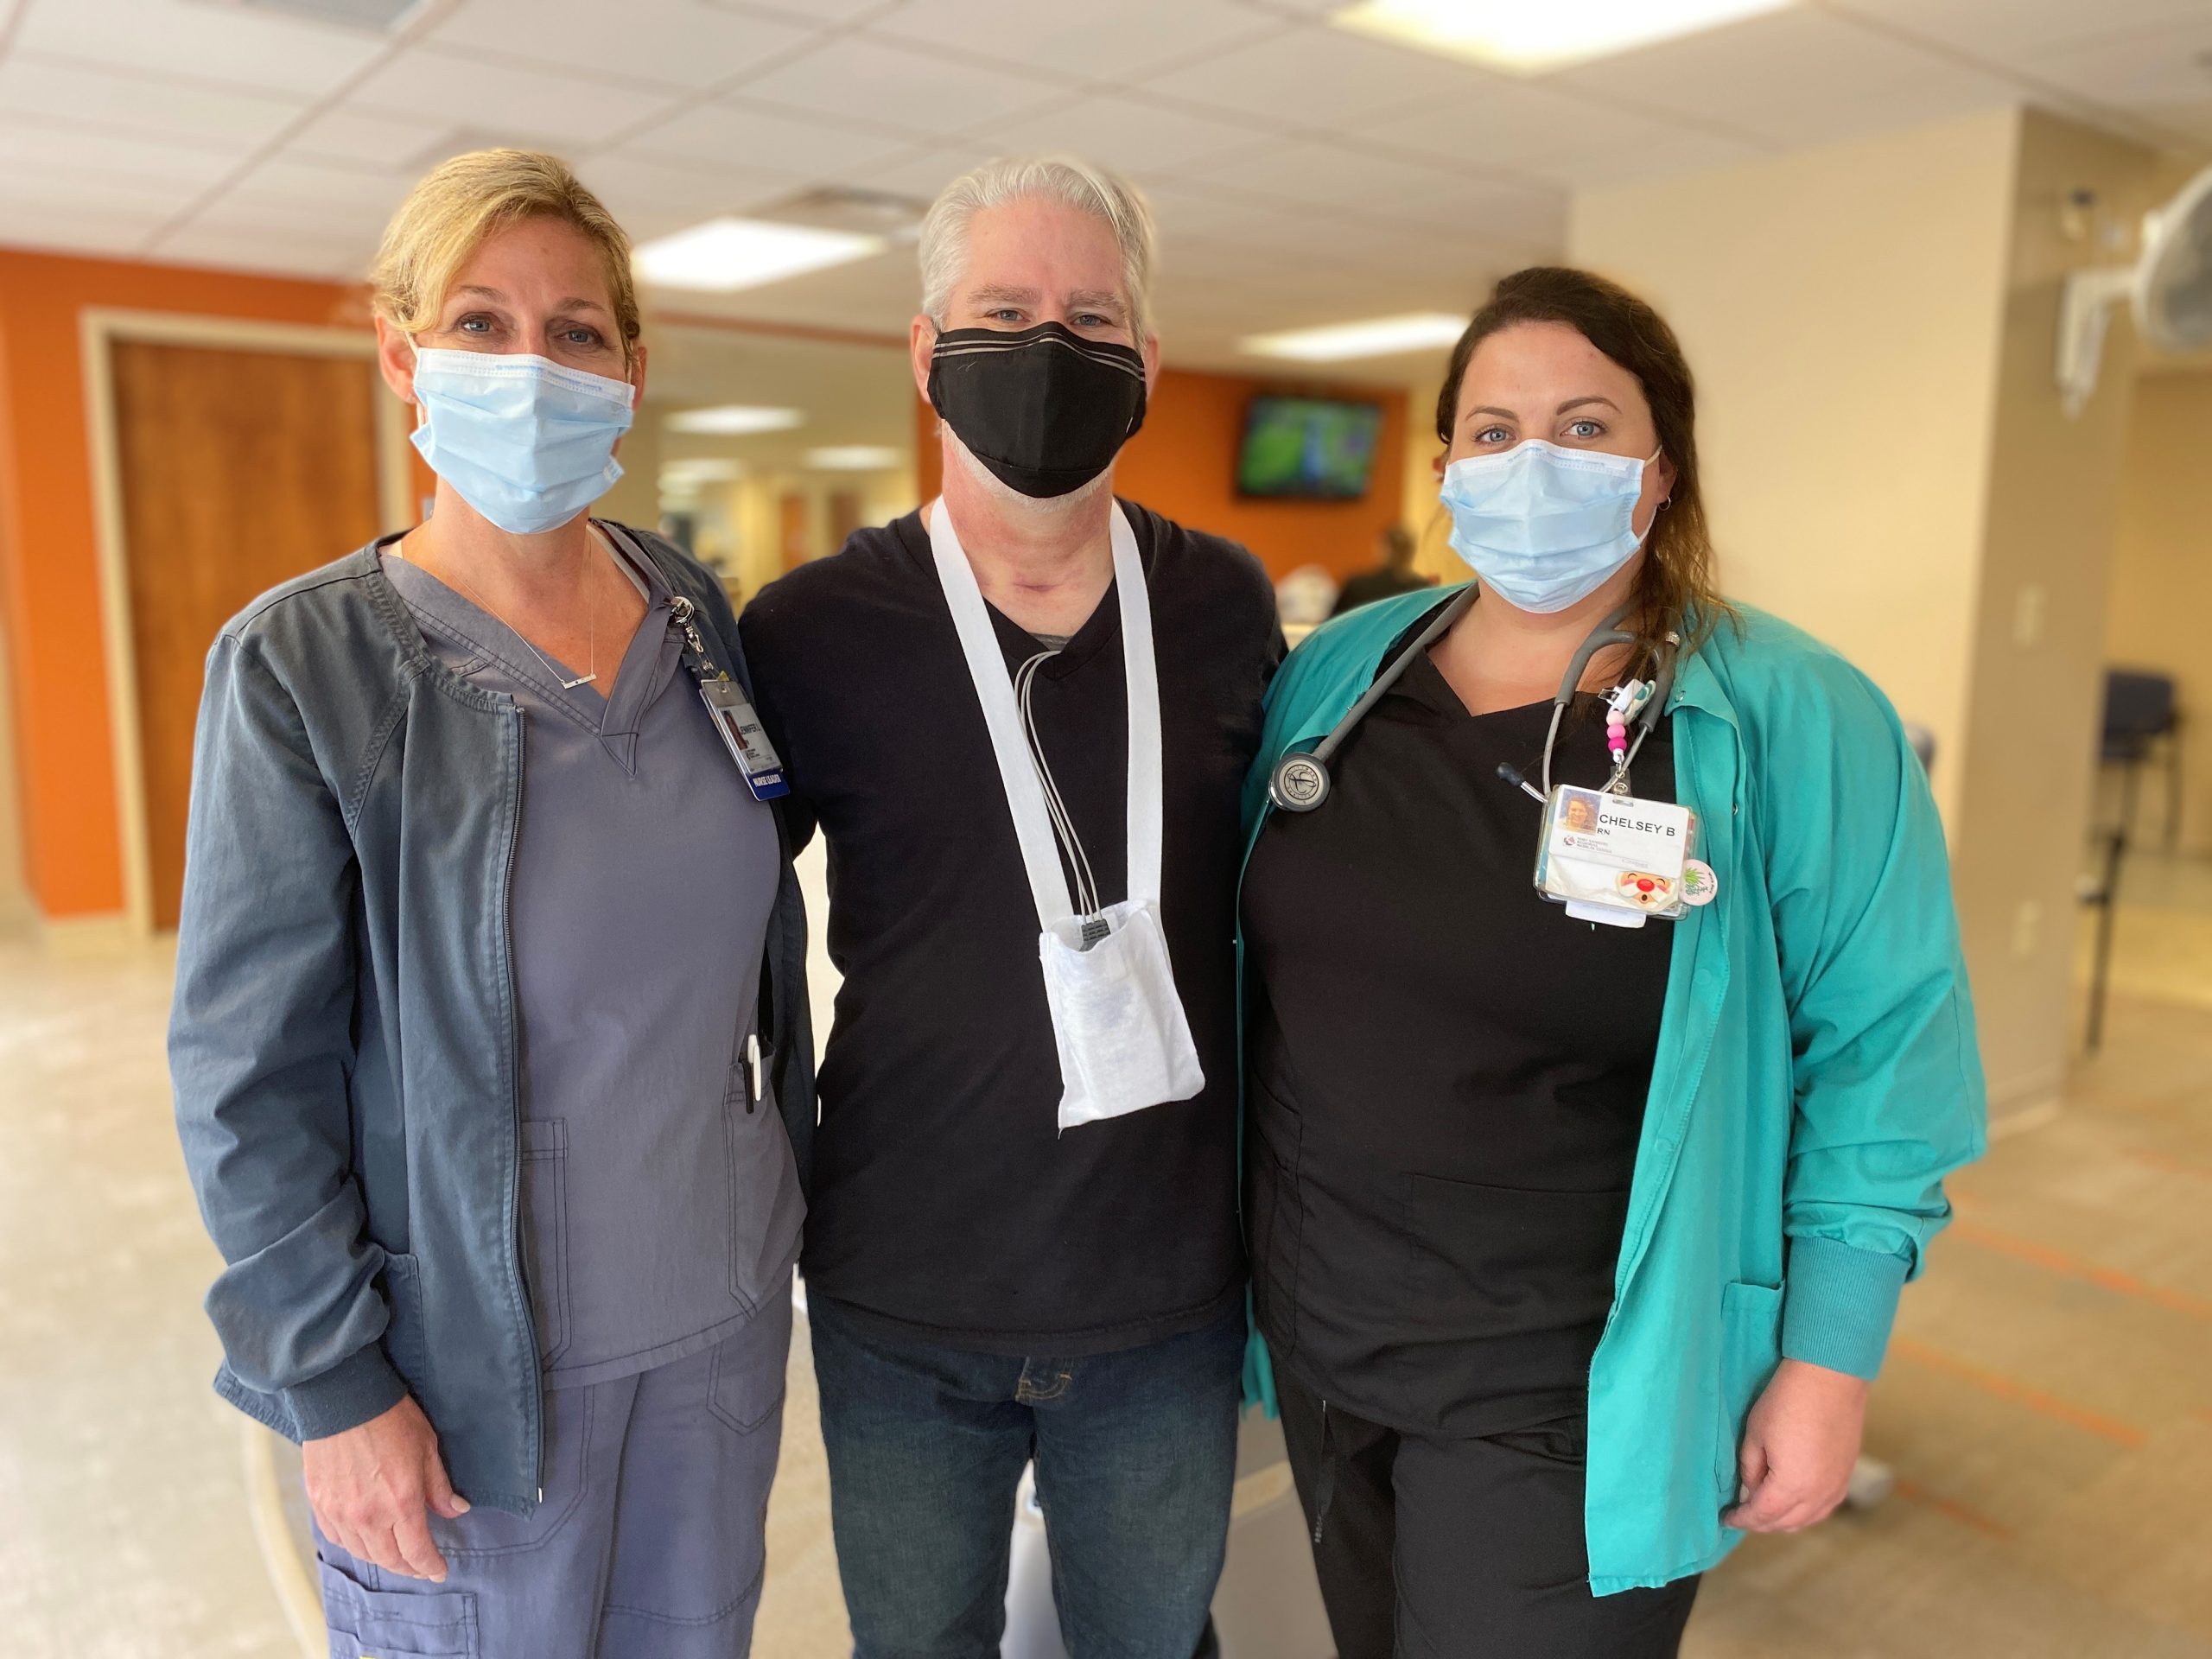 Ensor with nurses Jennifer Lamb and Chelsea Benson